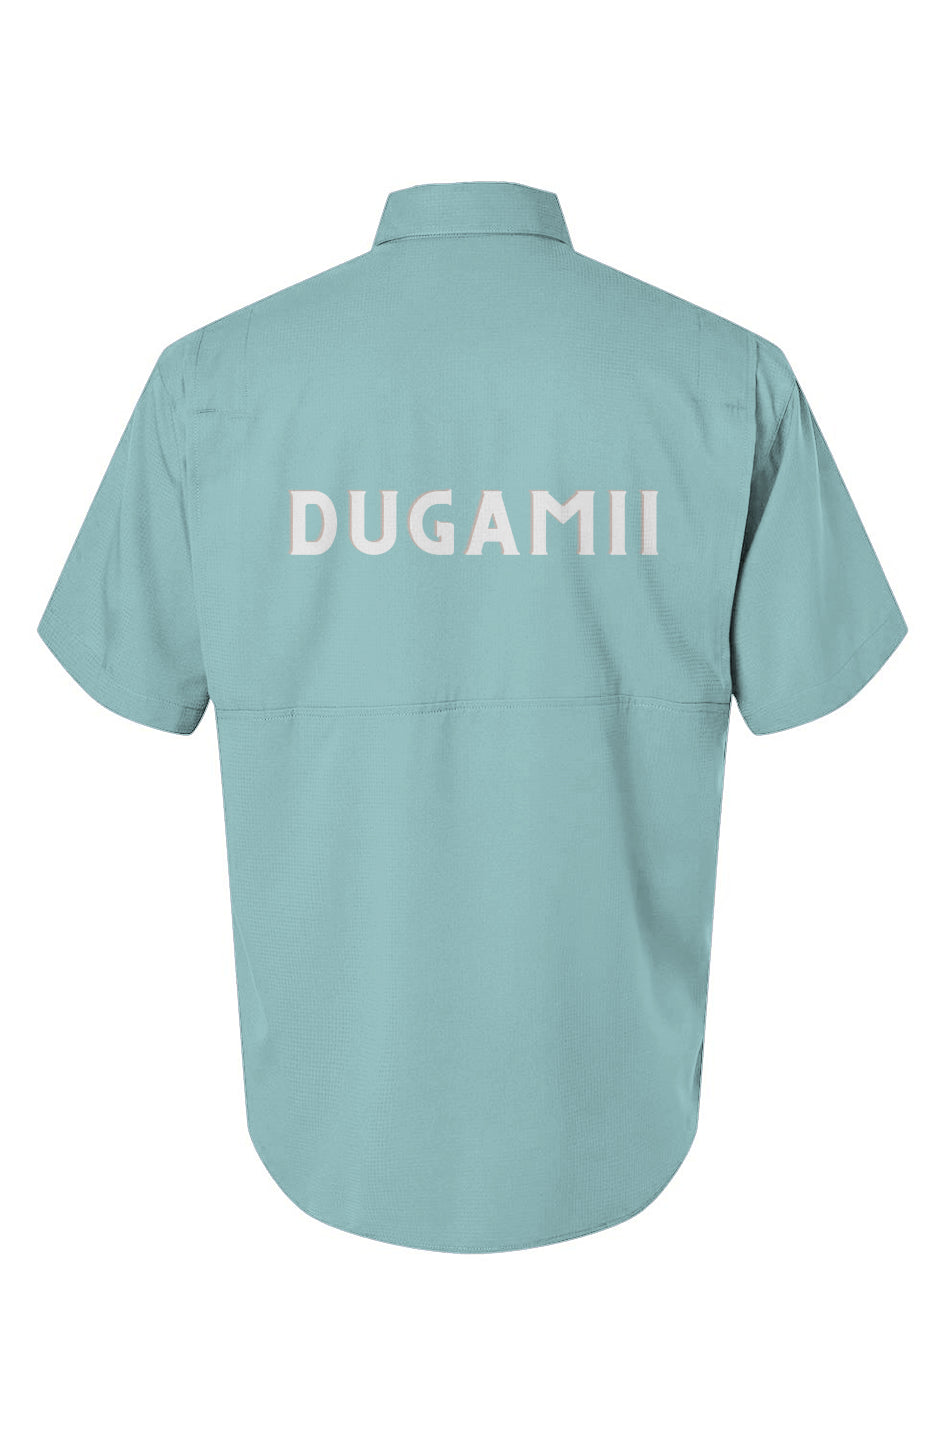 Men's DuGamii Aqua Blue Lightweight Fishing Shirt